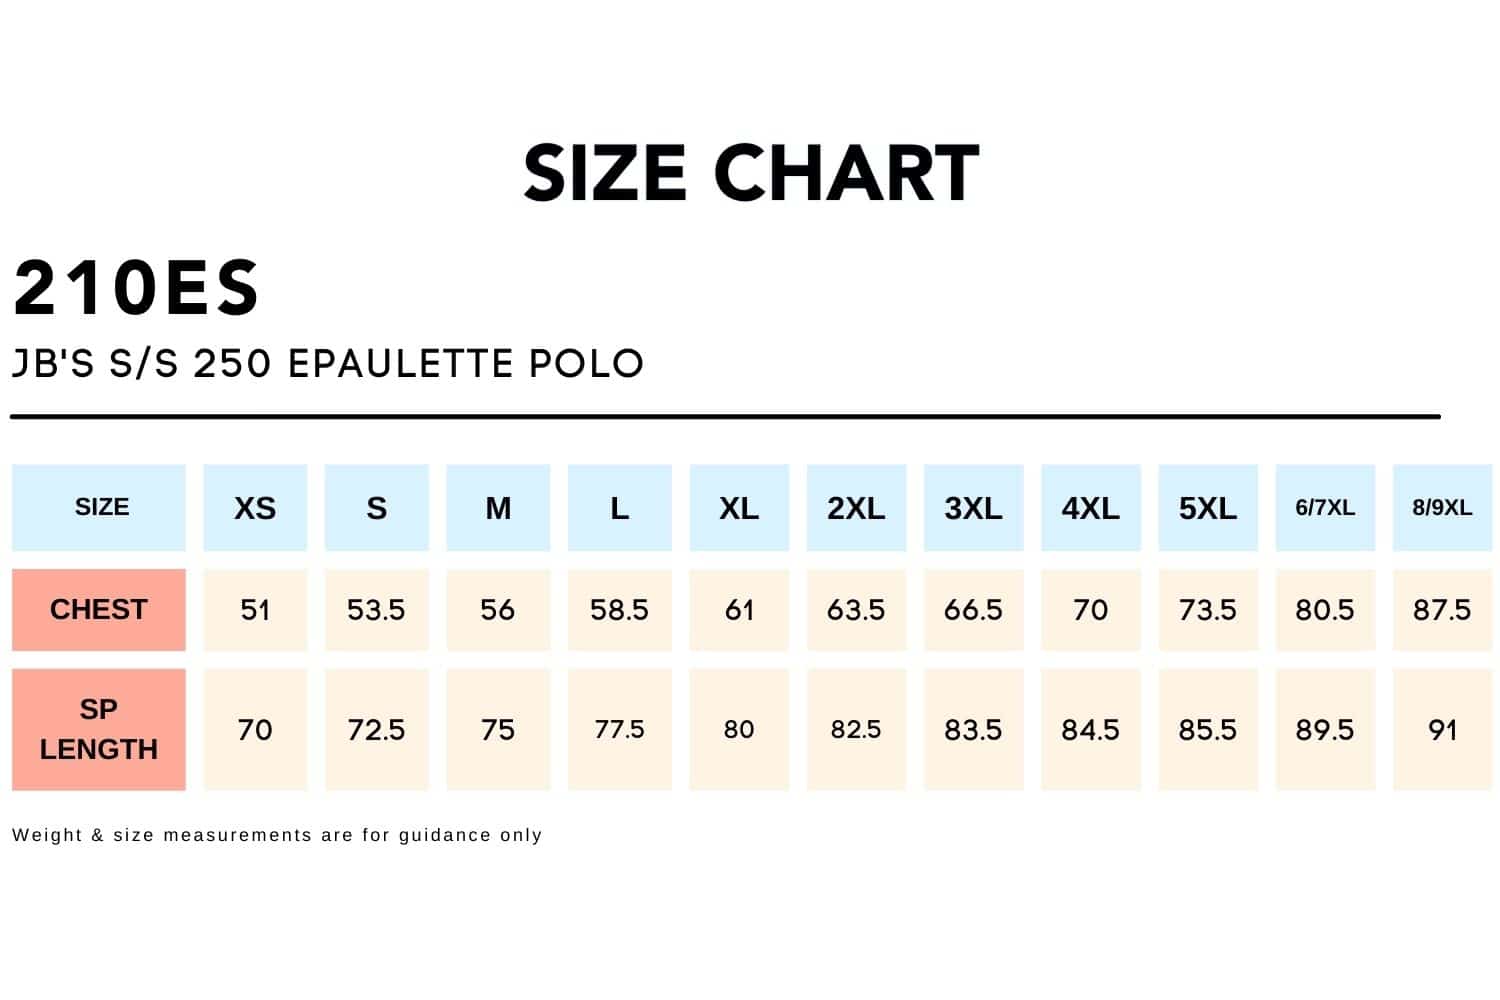 Size Chart_210ES_JB'S SS 250 EPAULETTE POLO